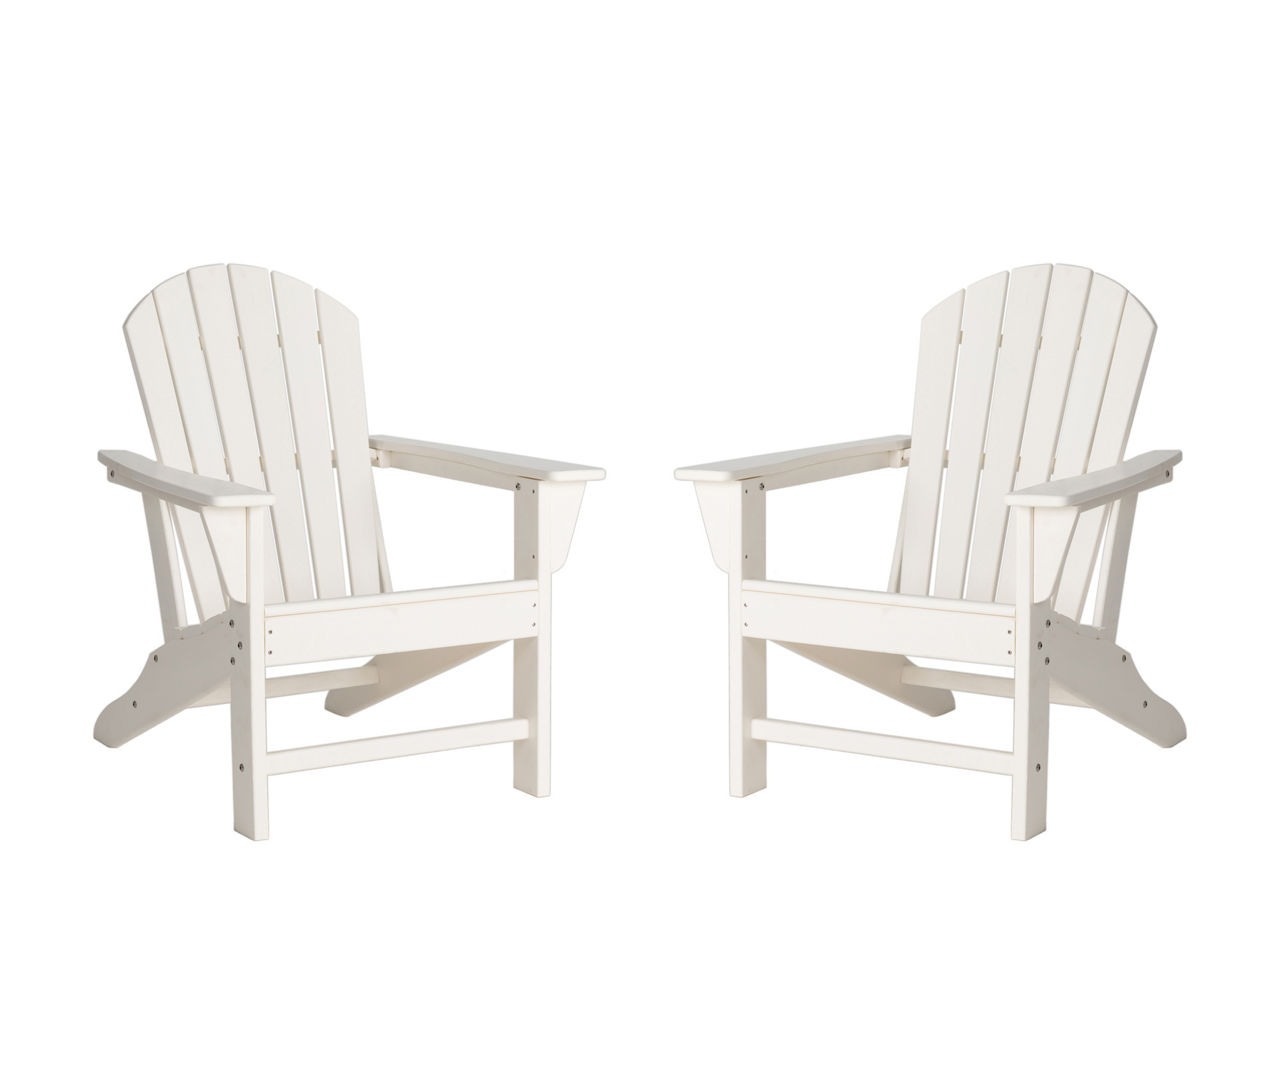 White Adirondack HDPE Outdoor Chairs, 2-Pack